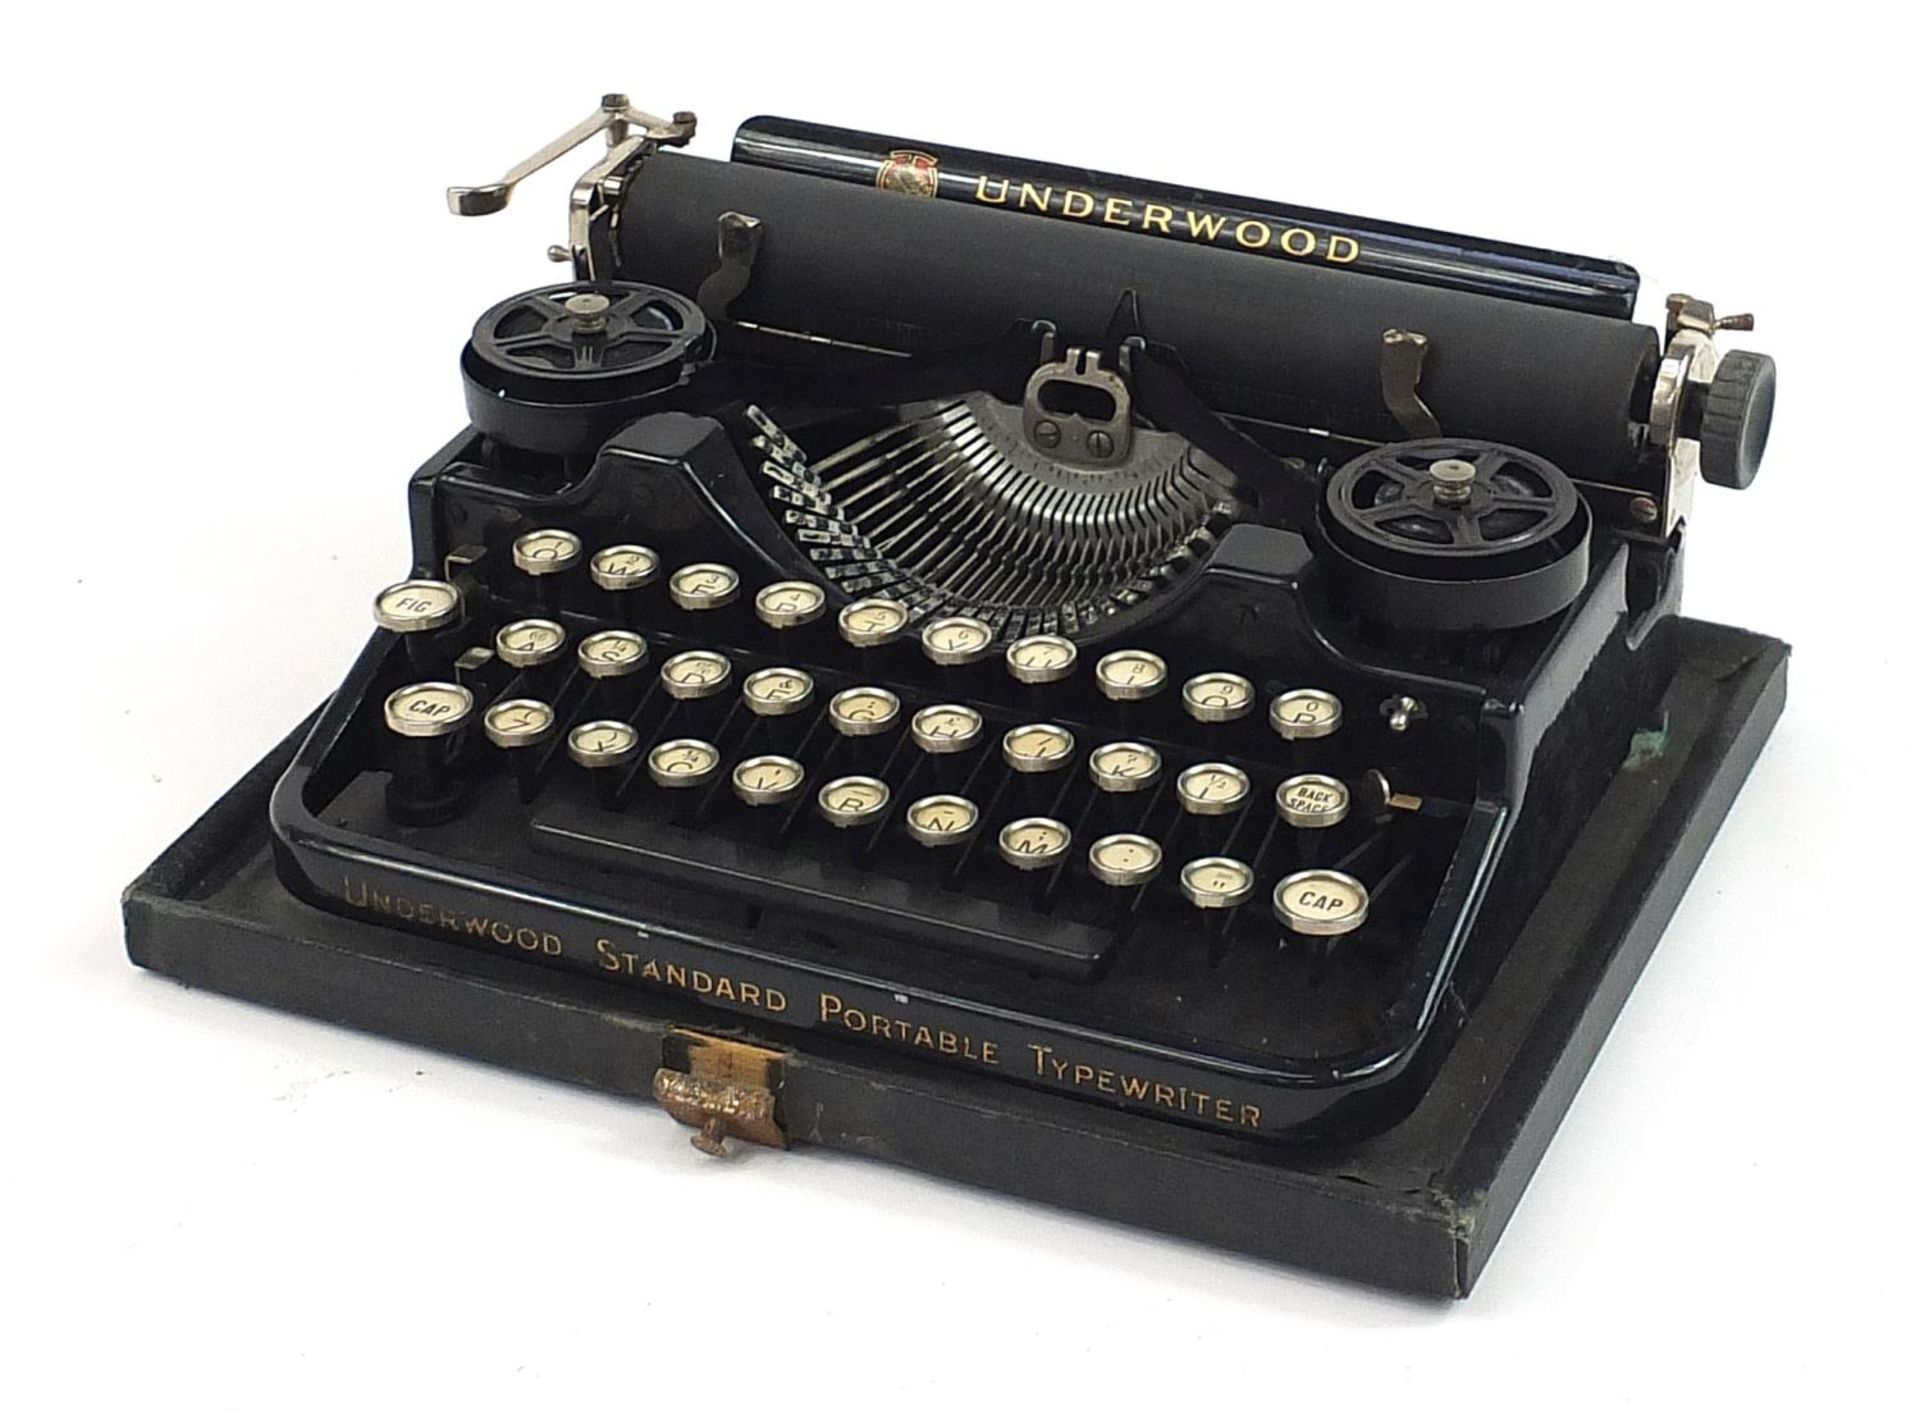 Vintage Underwood typewriter patented November 1915, 30cm wide - Image 2 of 5